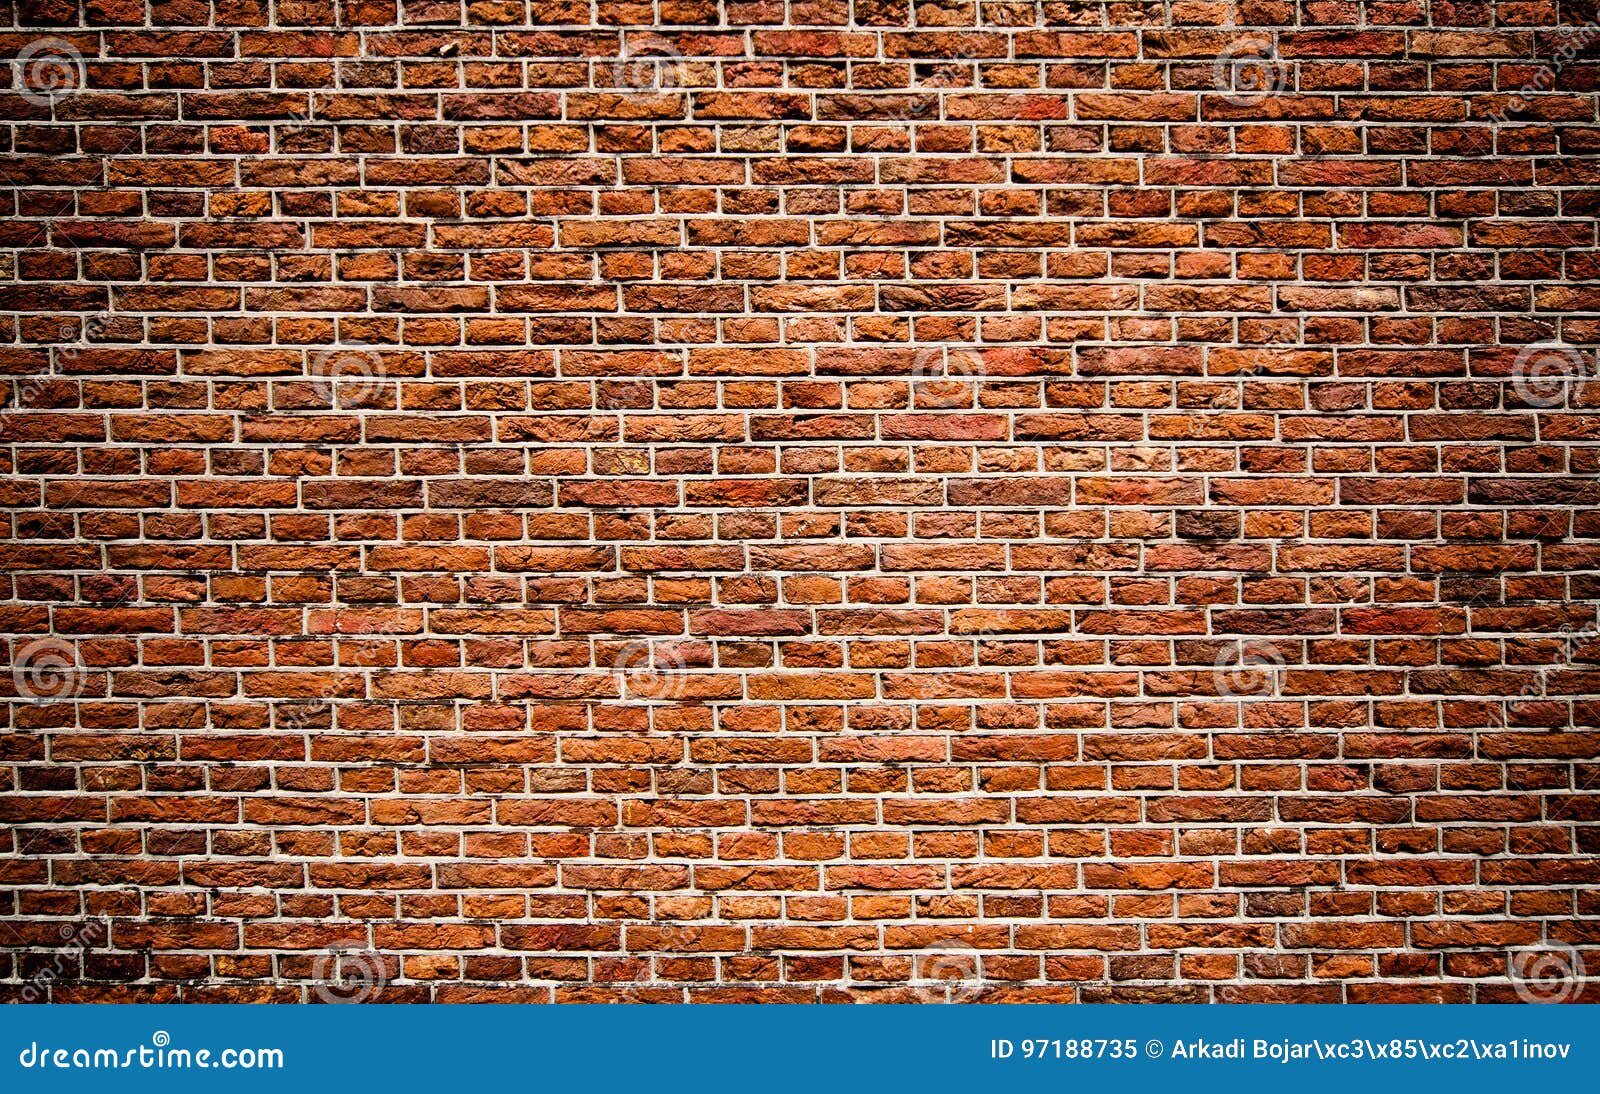 red bricks wall texture